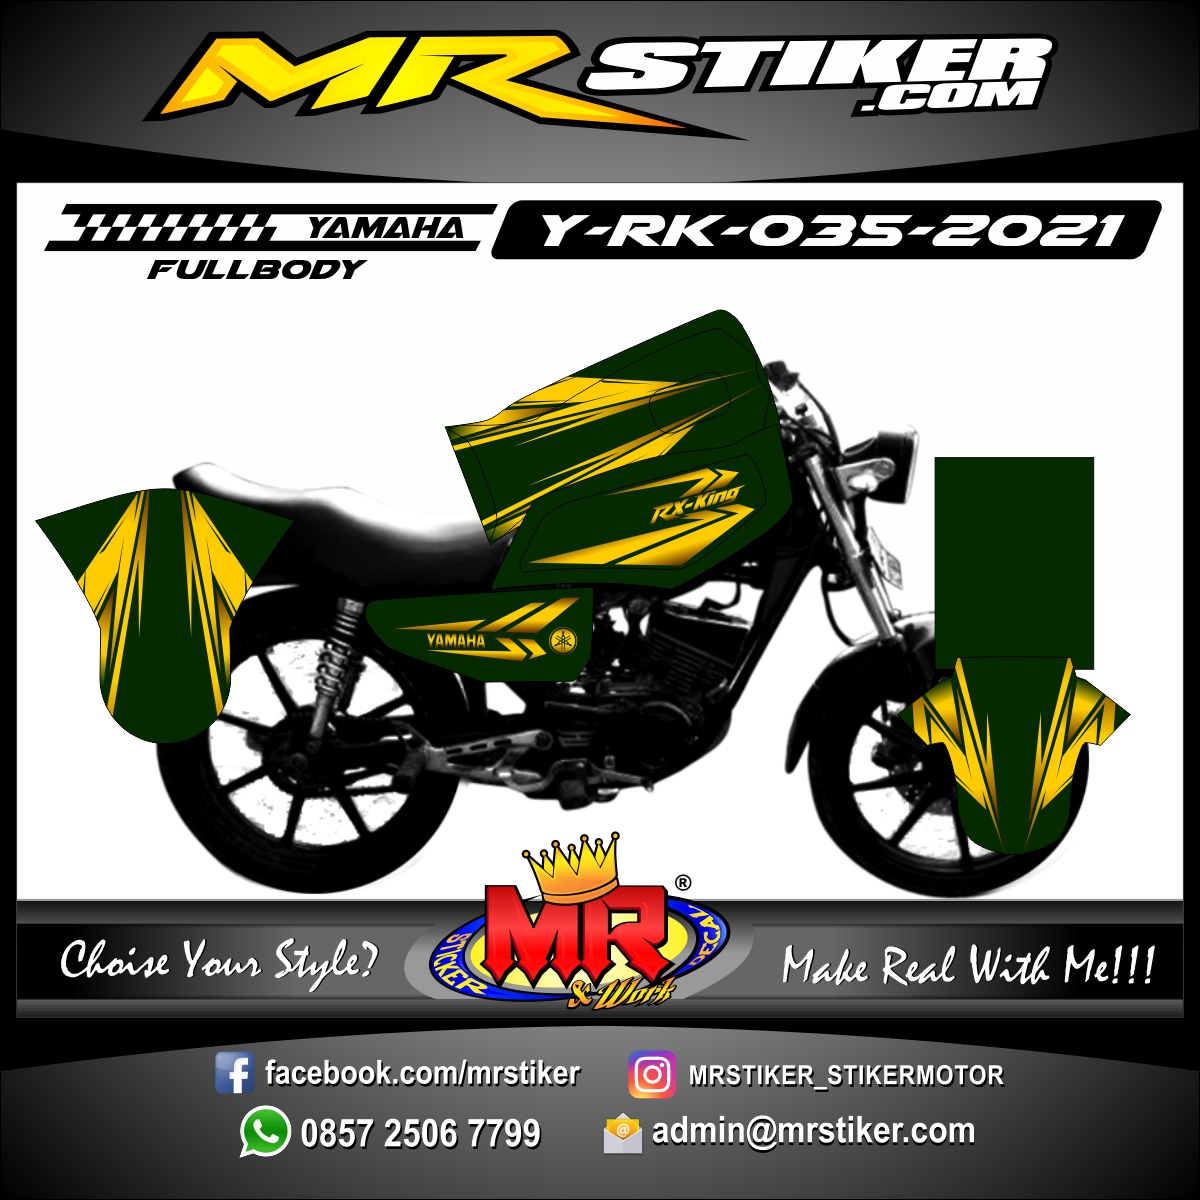 Stiker motor decal Yamaha RX KING Green Gold Grafis Line Race (FULLBODY)